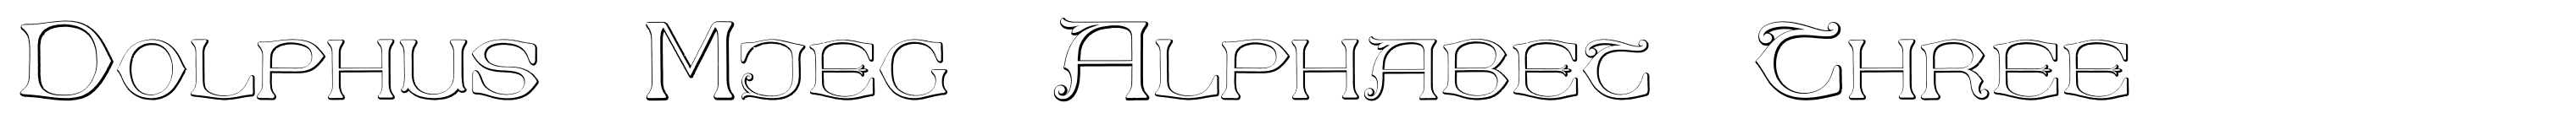 Dolphus Mieg Alphabet Three